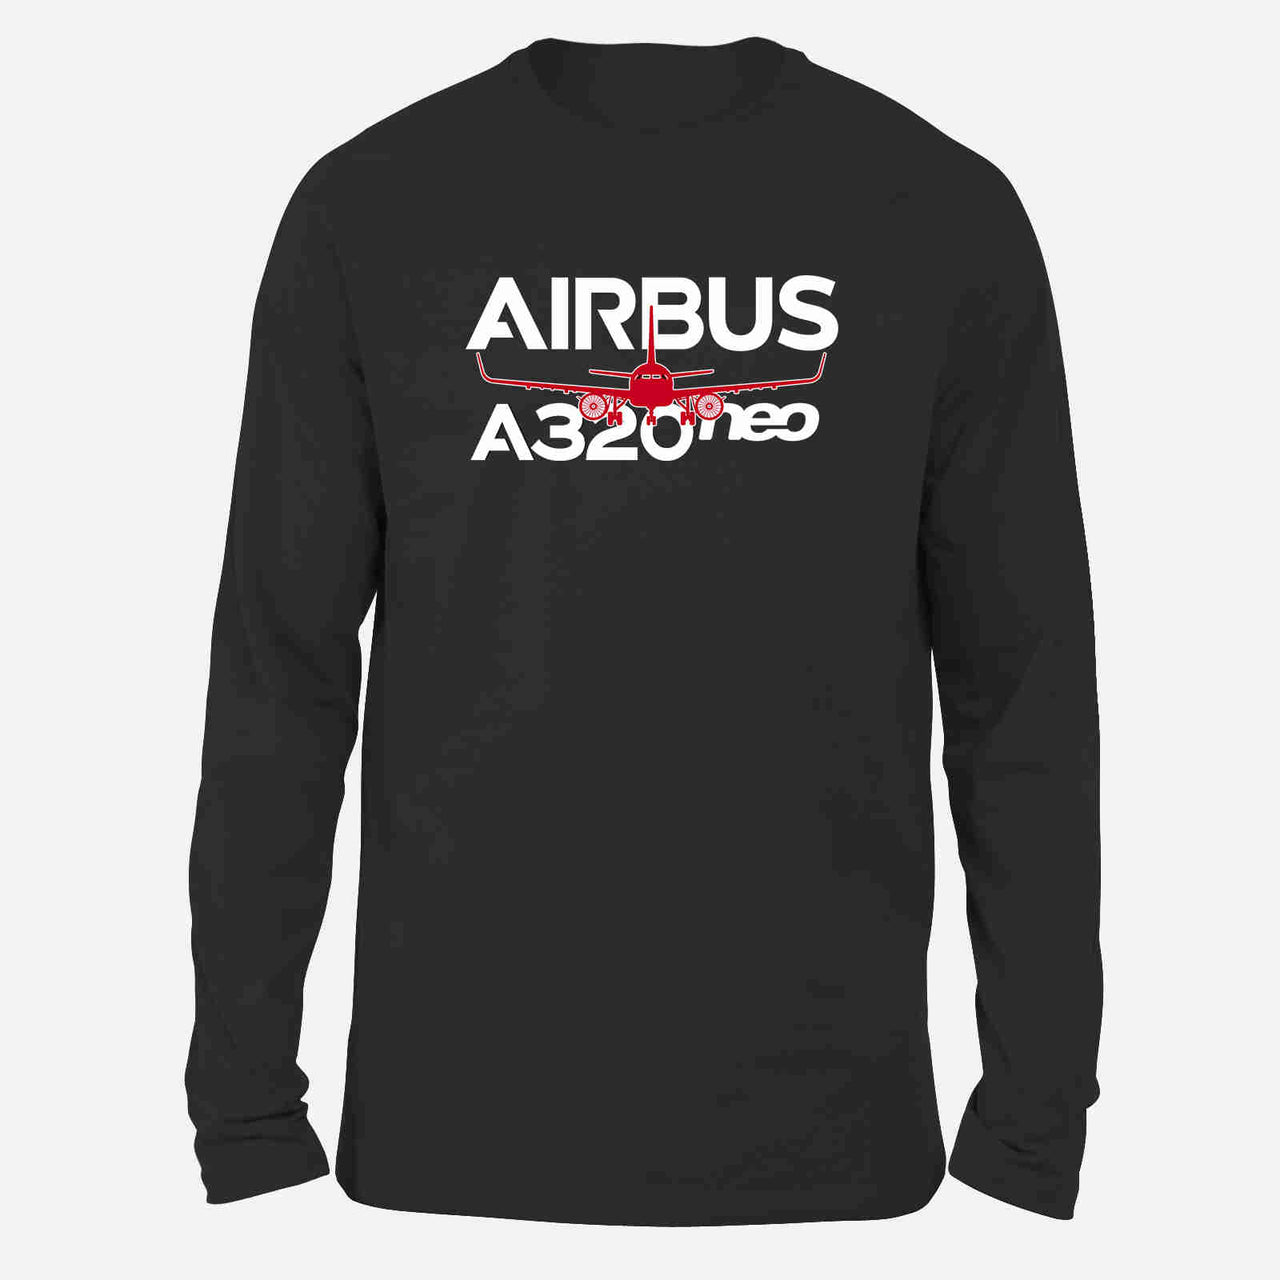 Amazing Airbus A320neo Designed Long-Sleeve T-Shirts